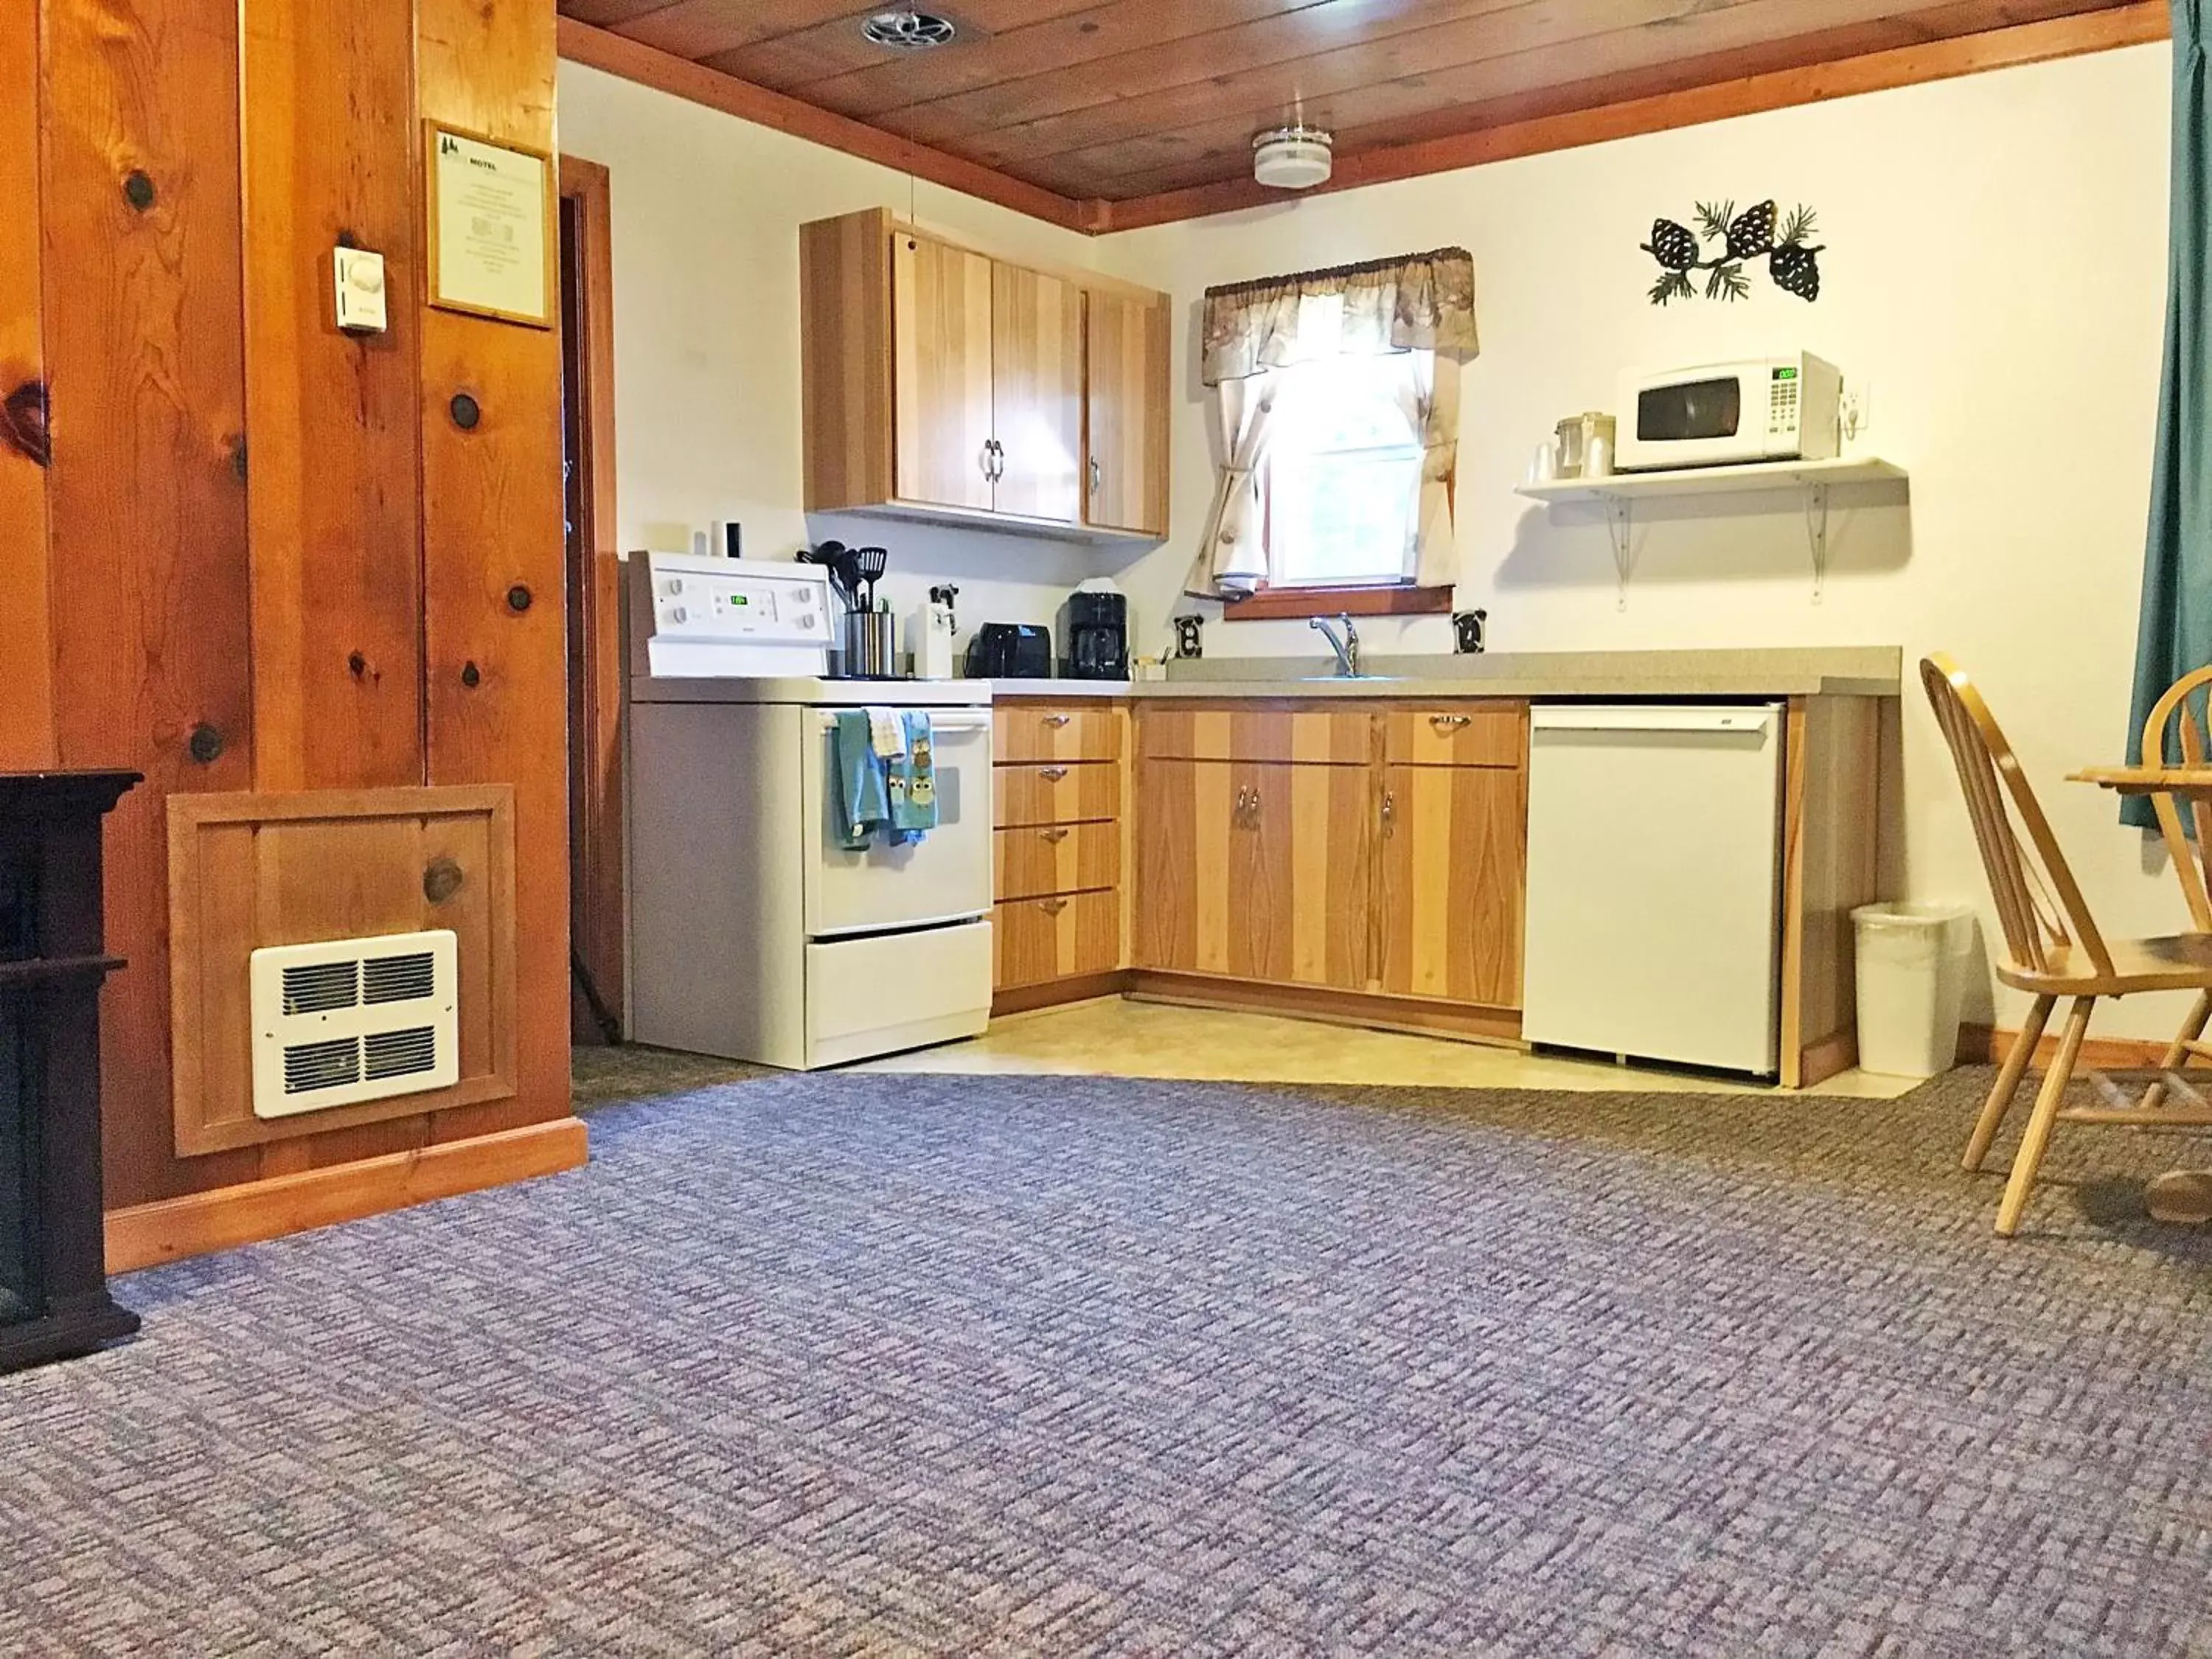 Kitchen/Kitchenette in Park Motel and Cabins